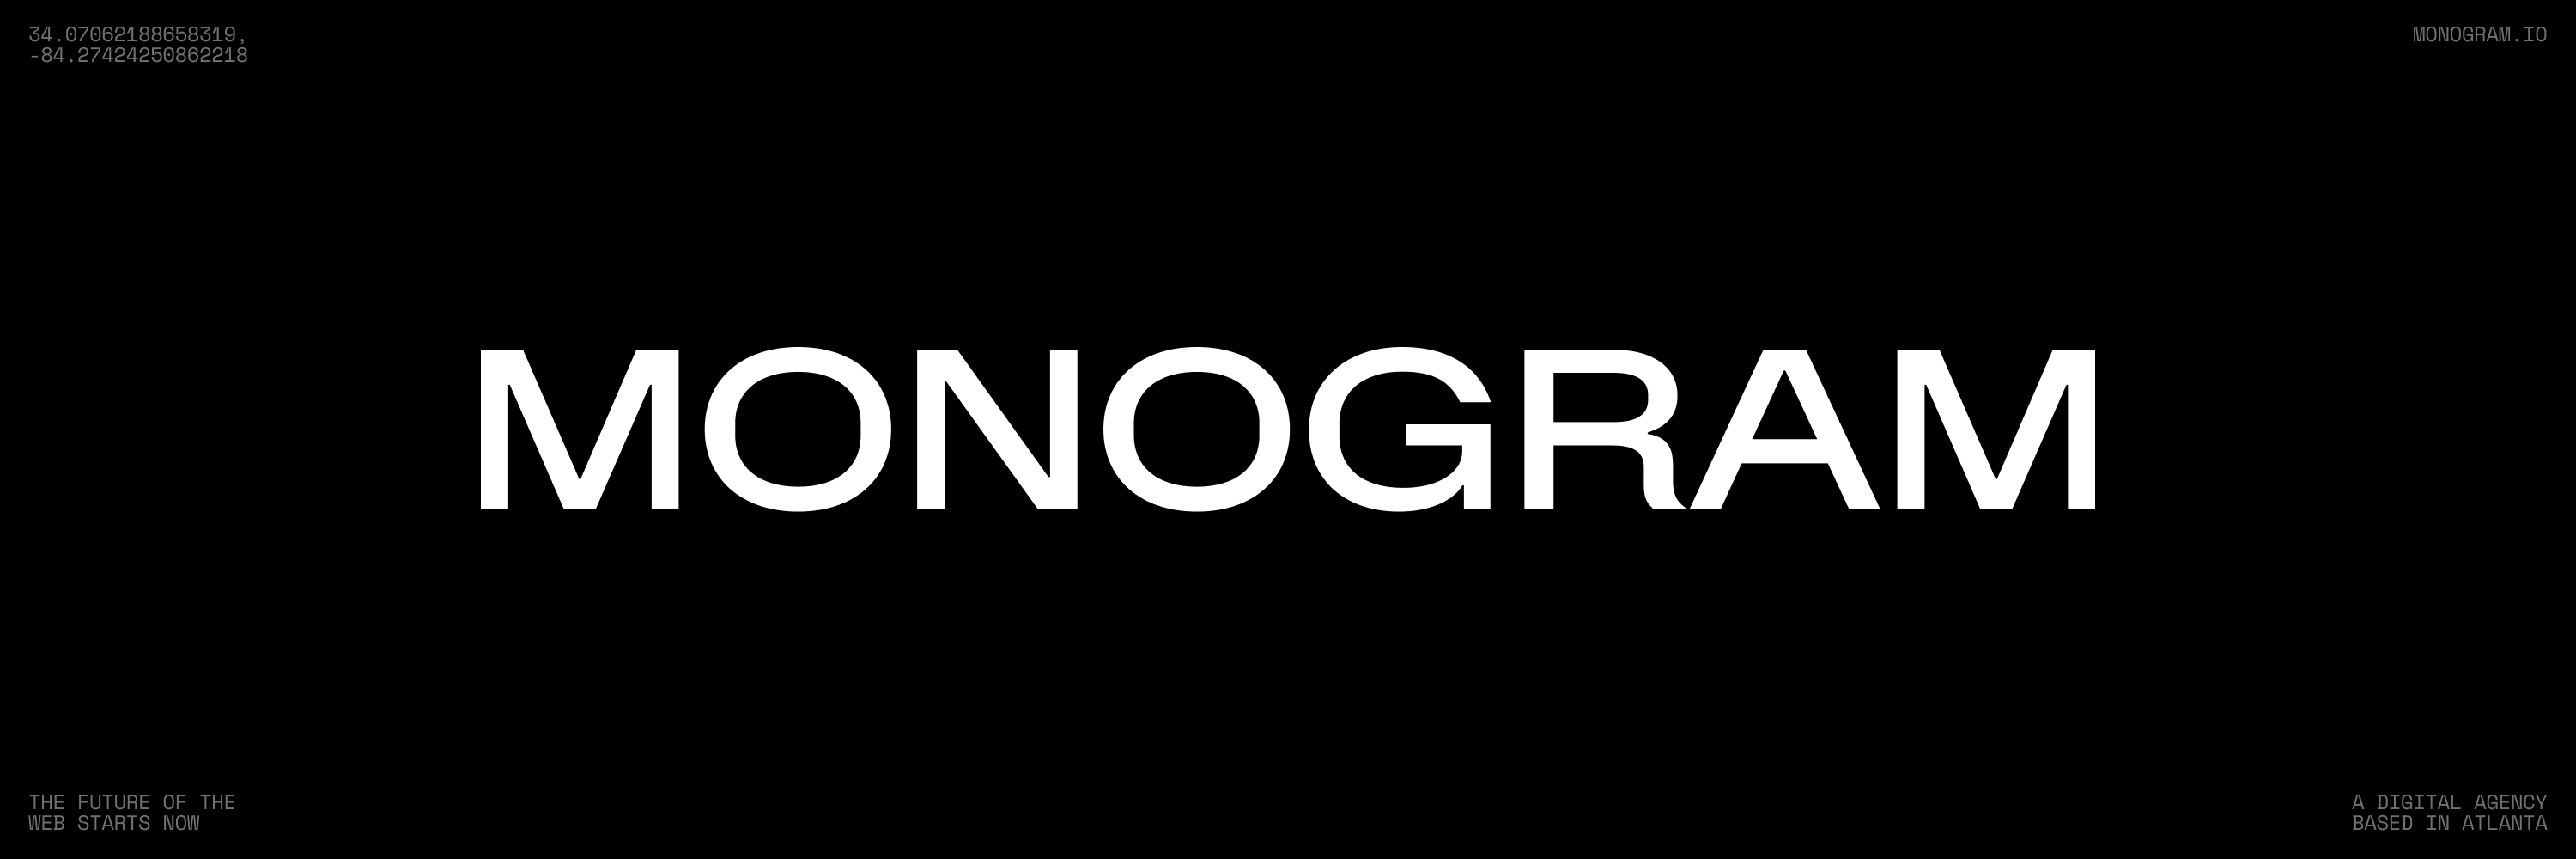 Monogram - Cover Image